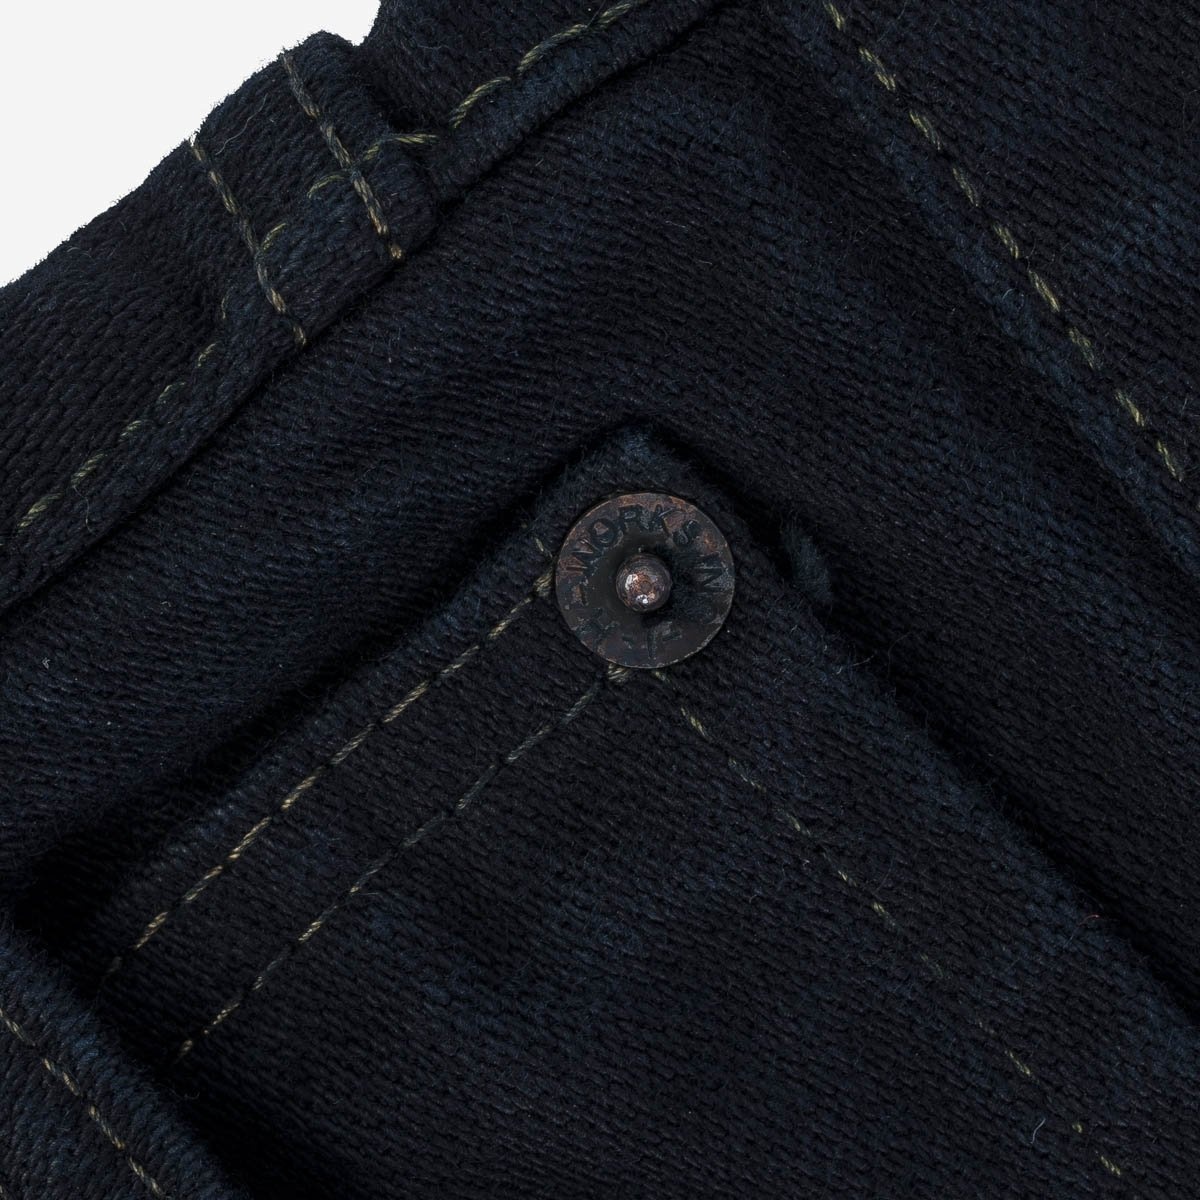 IH-888SBR-14od 14oz Broken Twill Selvedge Denim Medium/High Rise Tapered Cut Jeans - Indigo Overdyed - 11